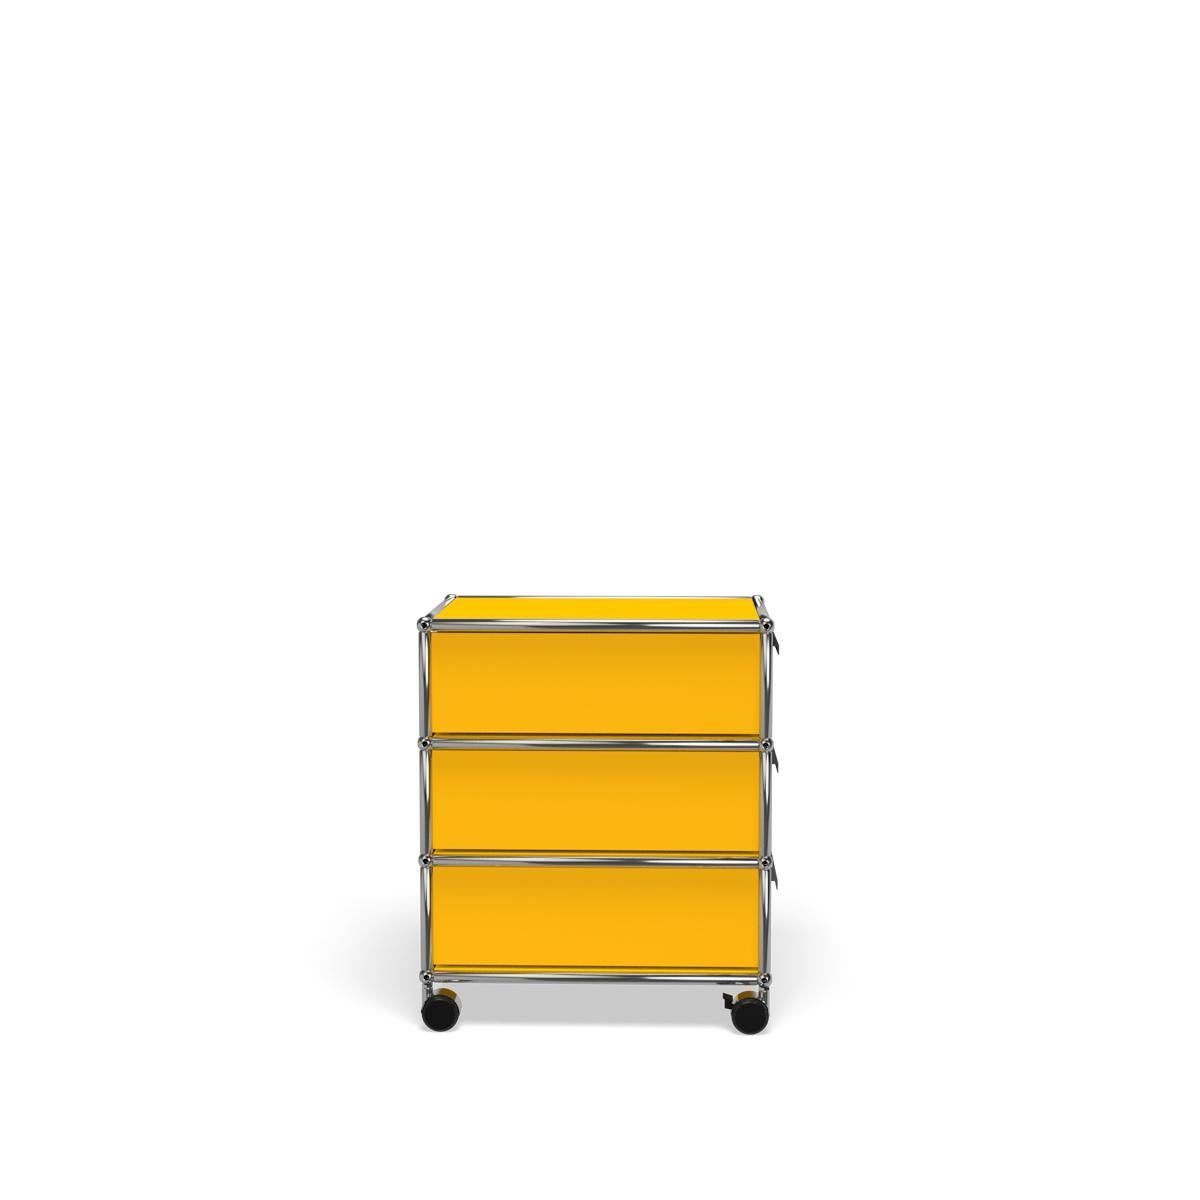 Im Angebot: USM Haller Pedestal V Lagersystem, Yellow (Golden Yellow) 3